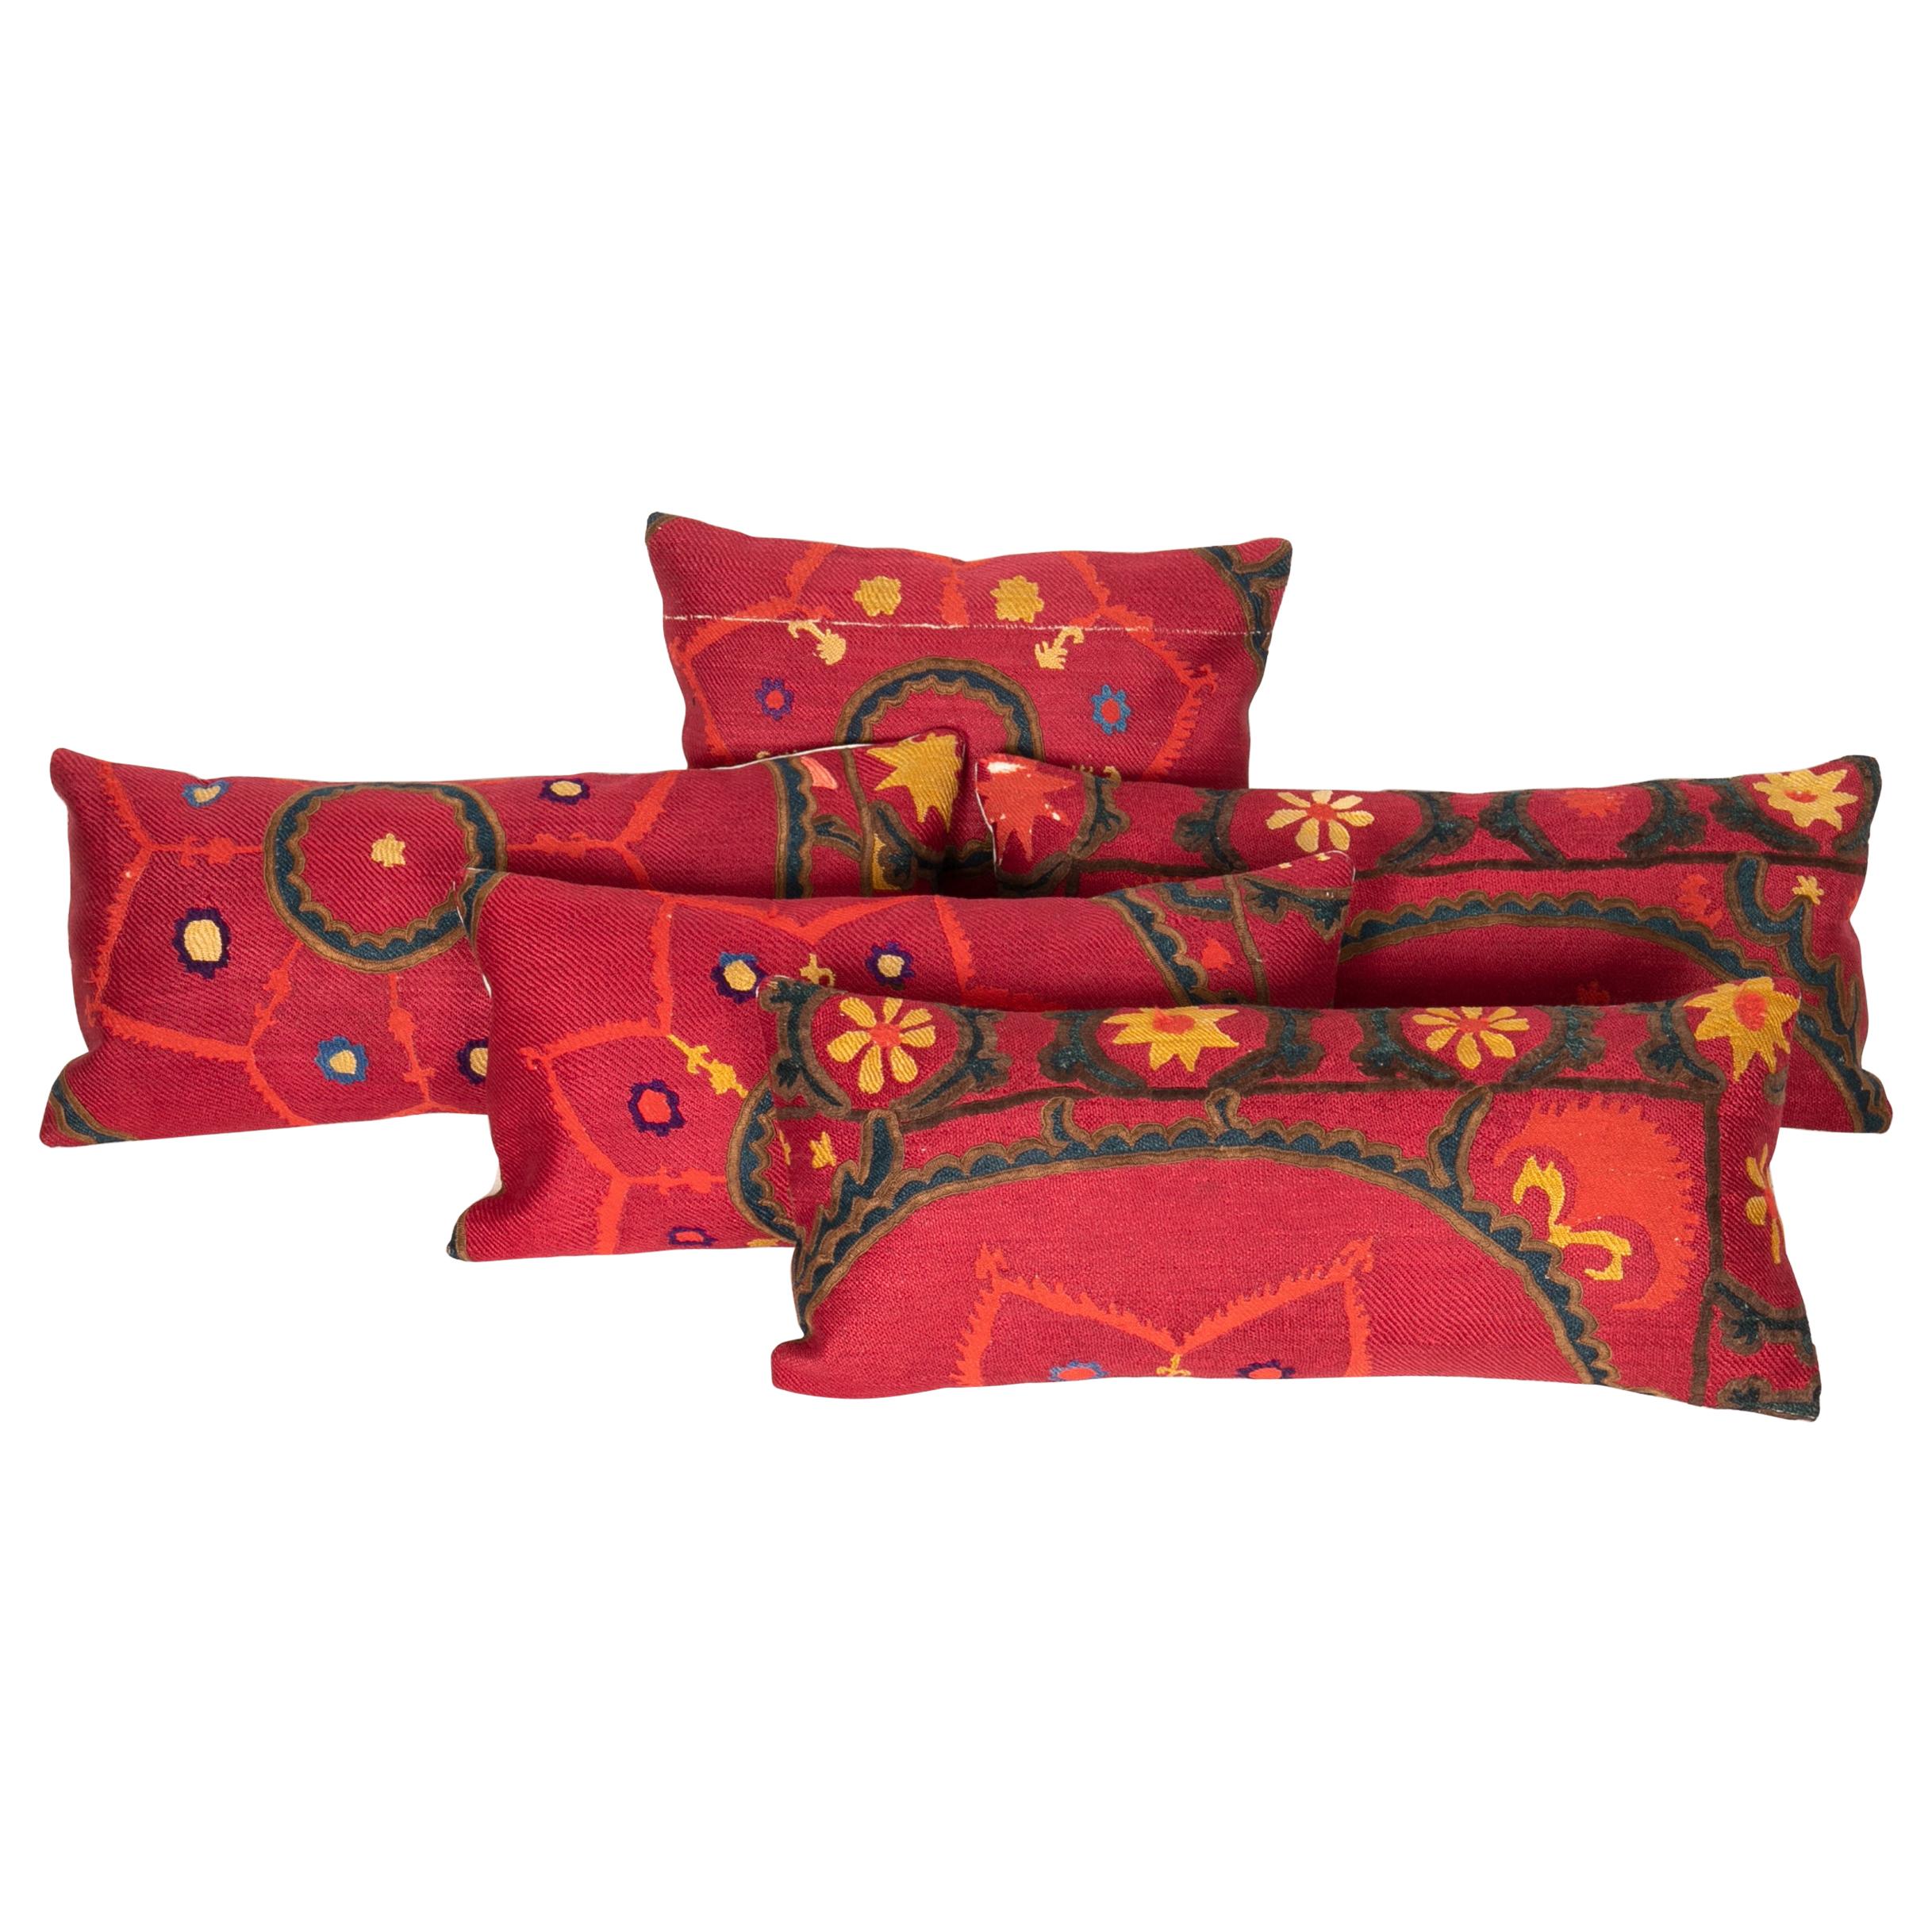 Antique Suzani Pillows Made from a 19th Century Tashkent Suzani